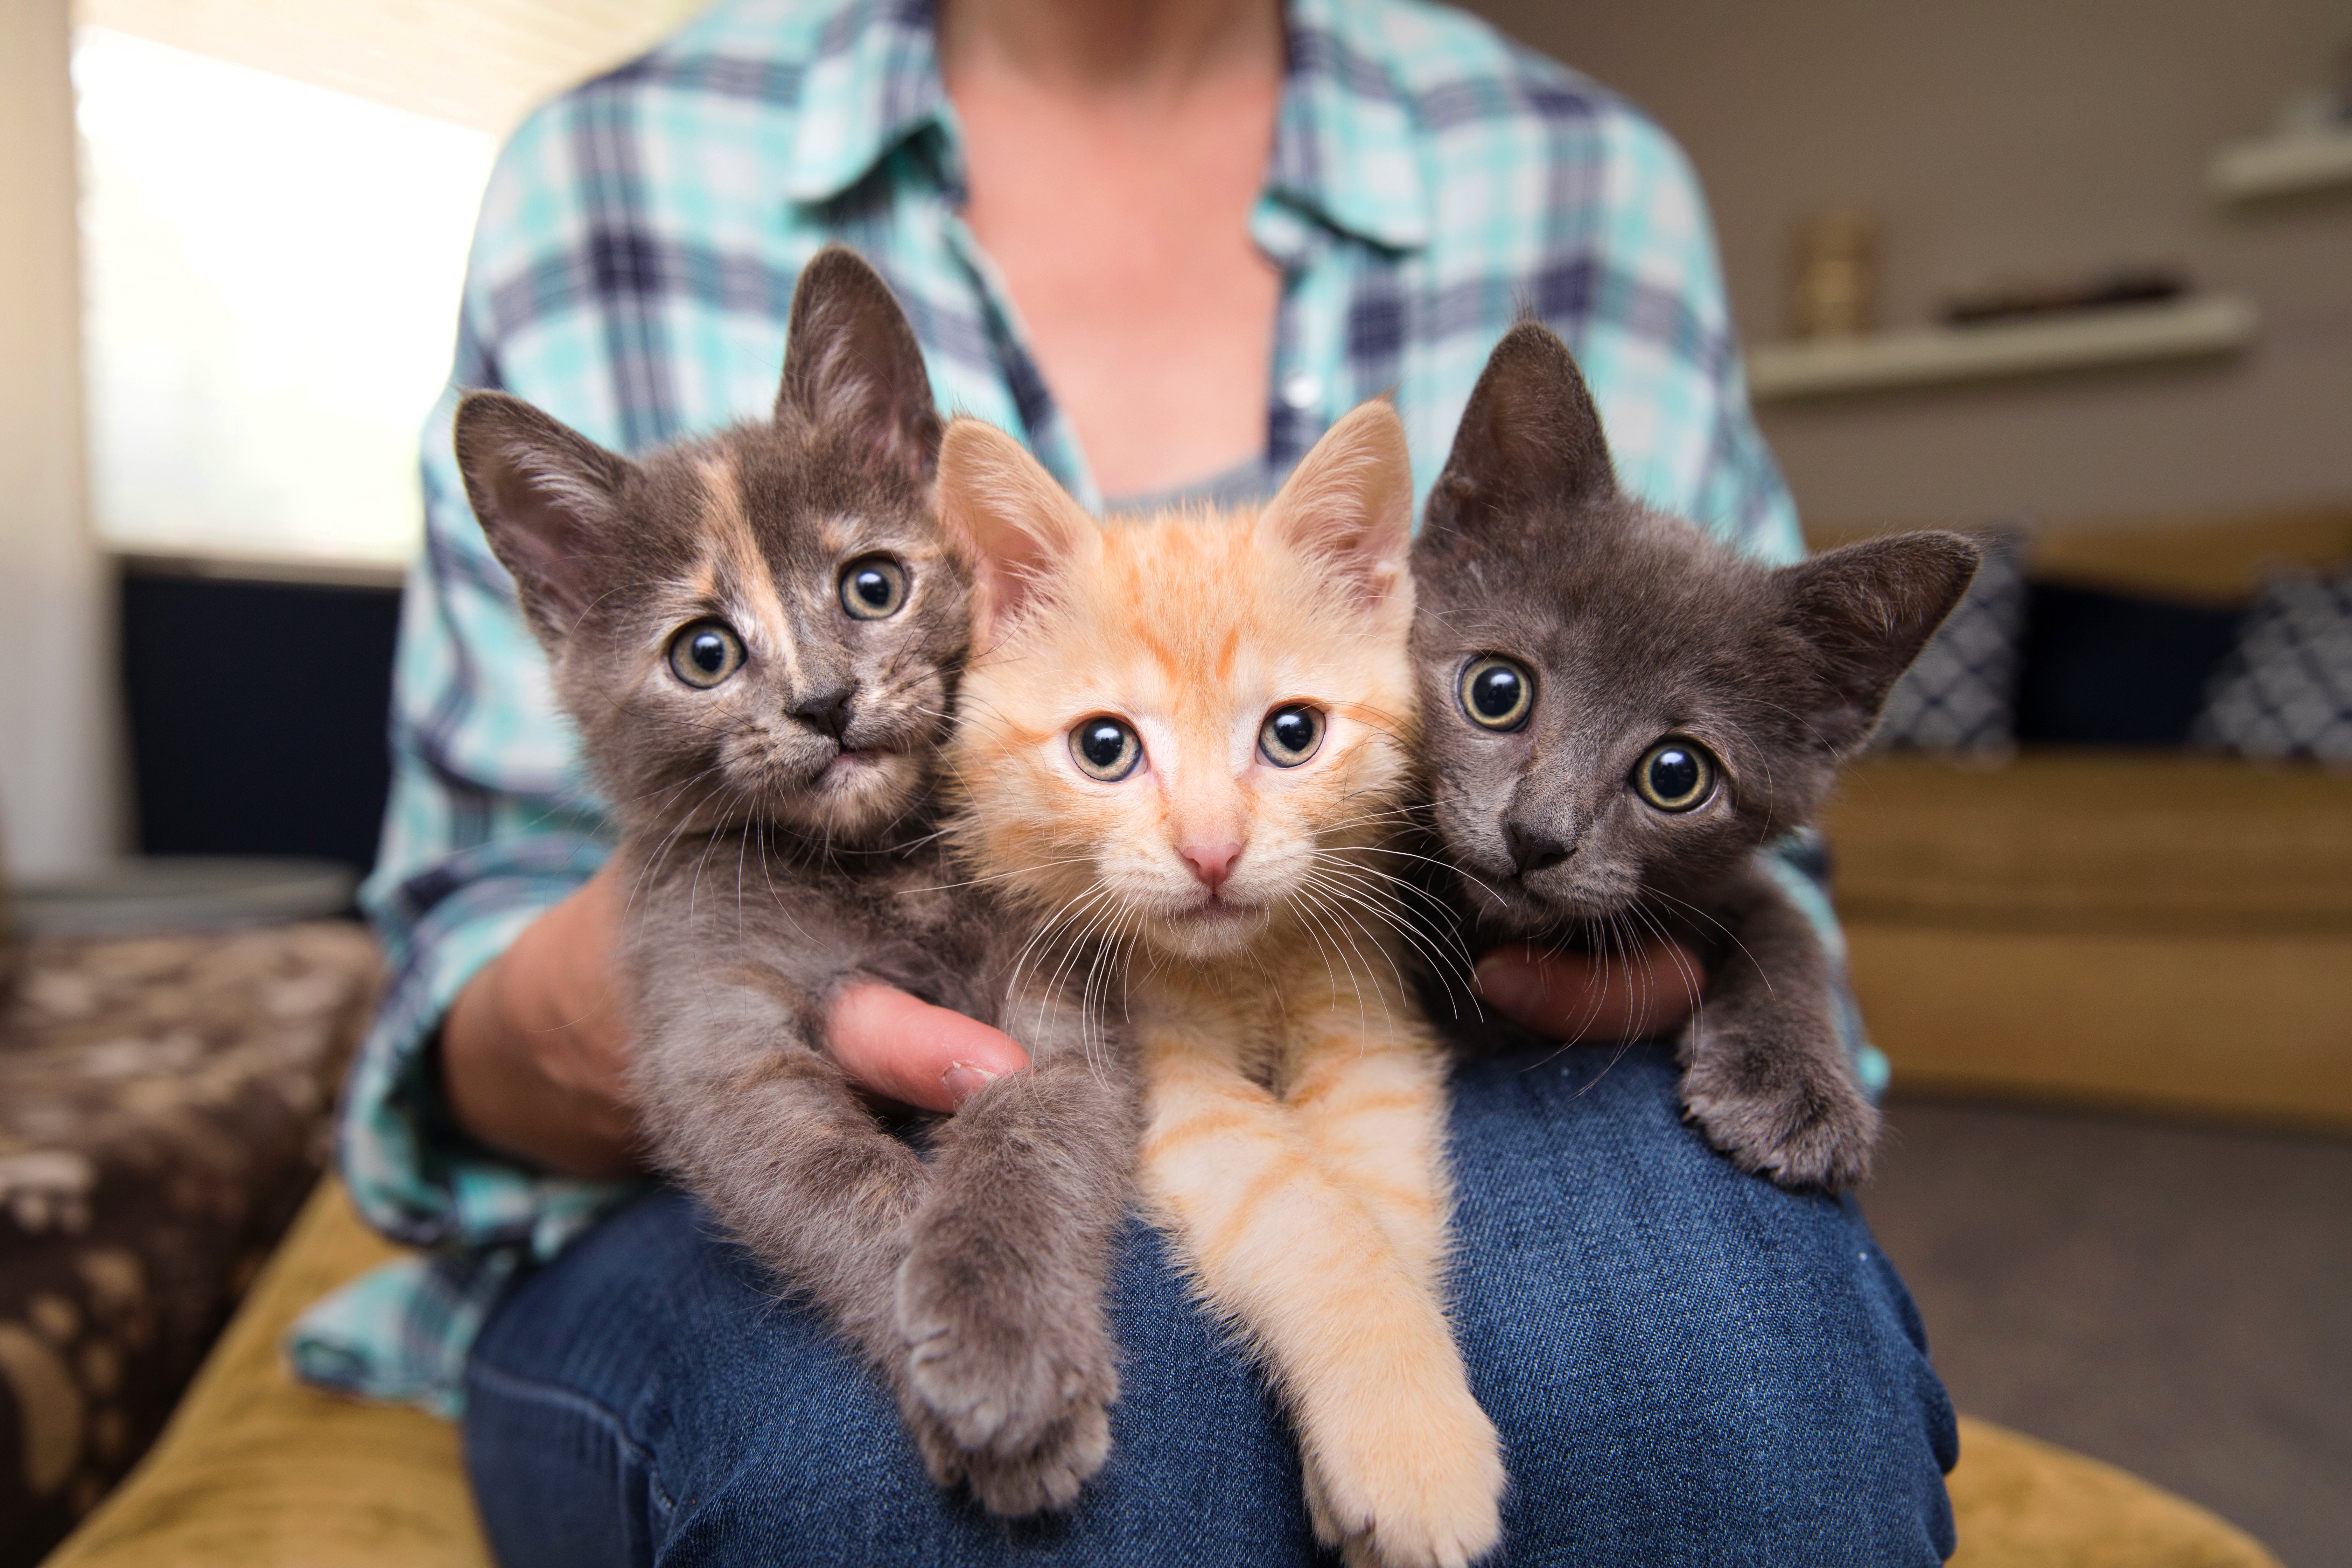 Three tiny kitten sitting on a person's lap